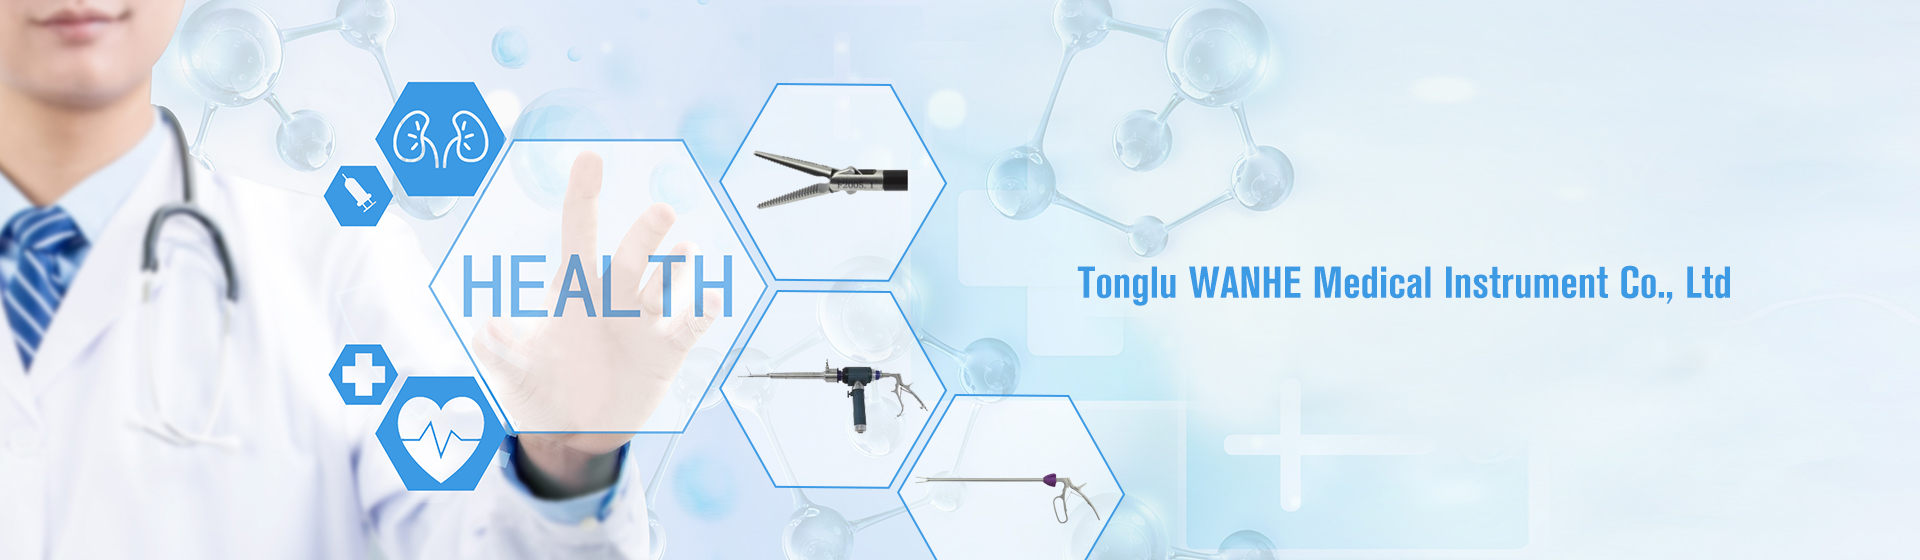 Tonglu WANHE Medical Instrument Co., Ltd